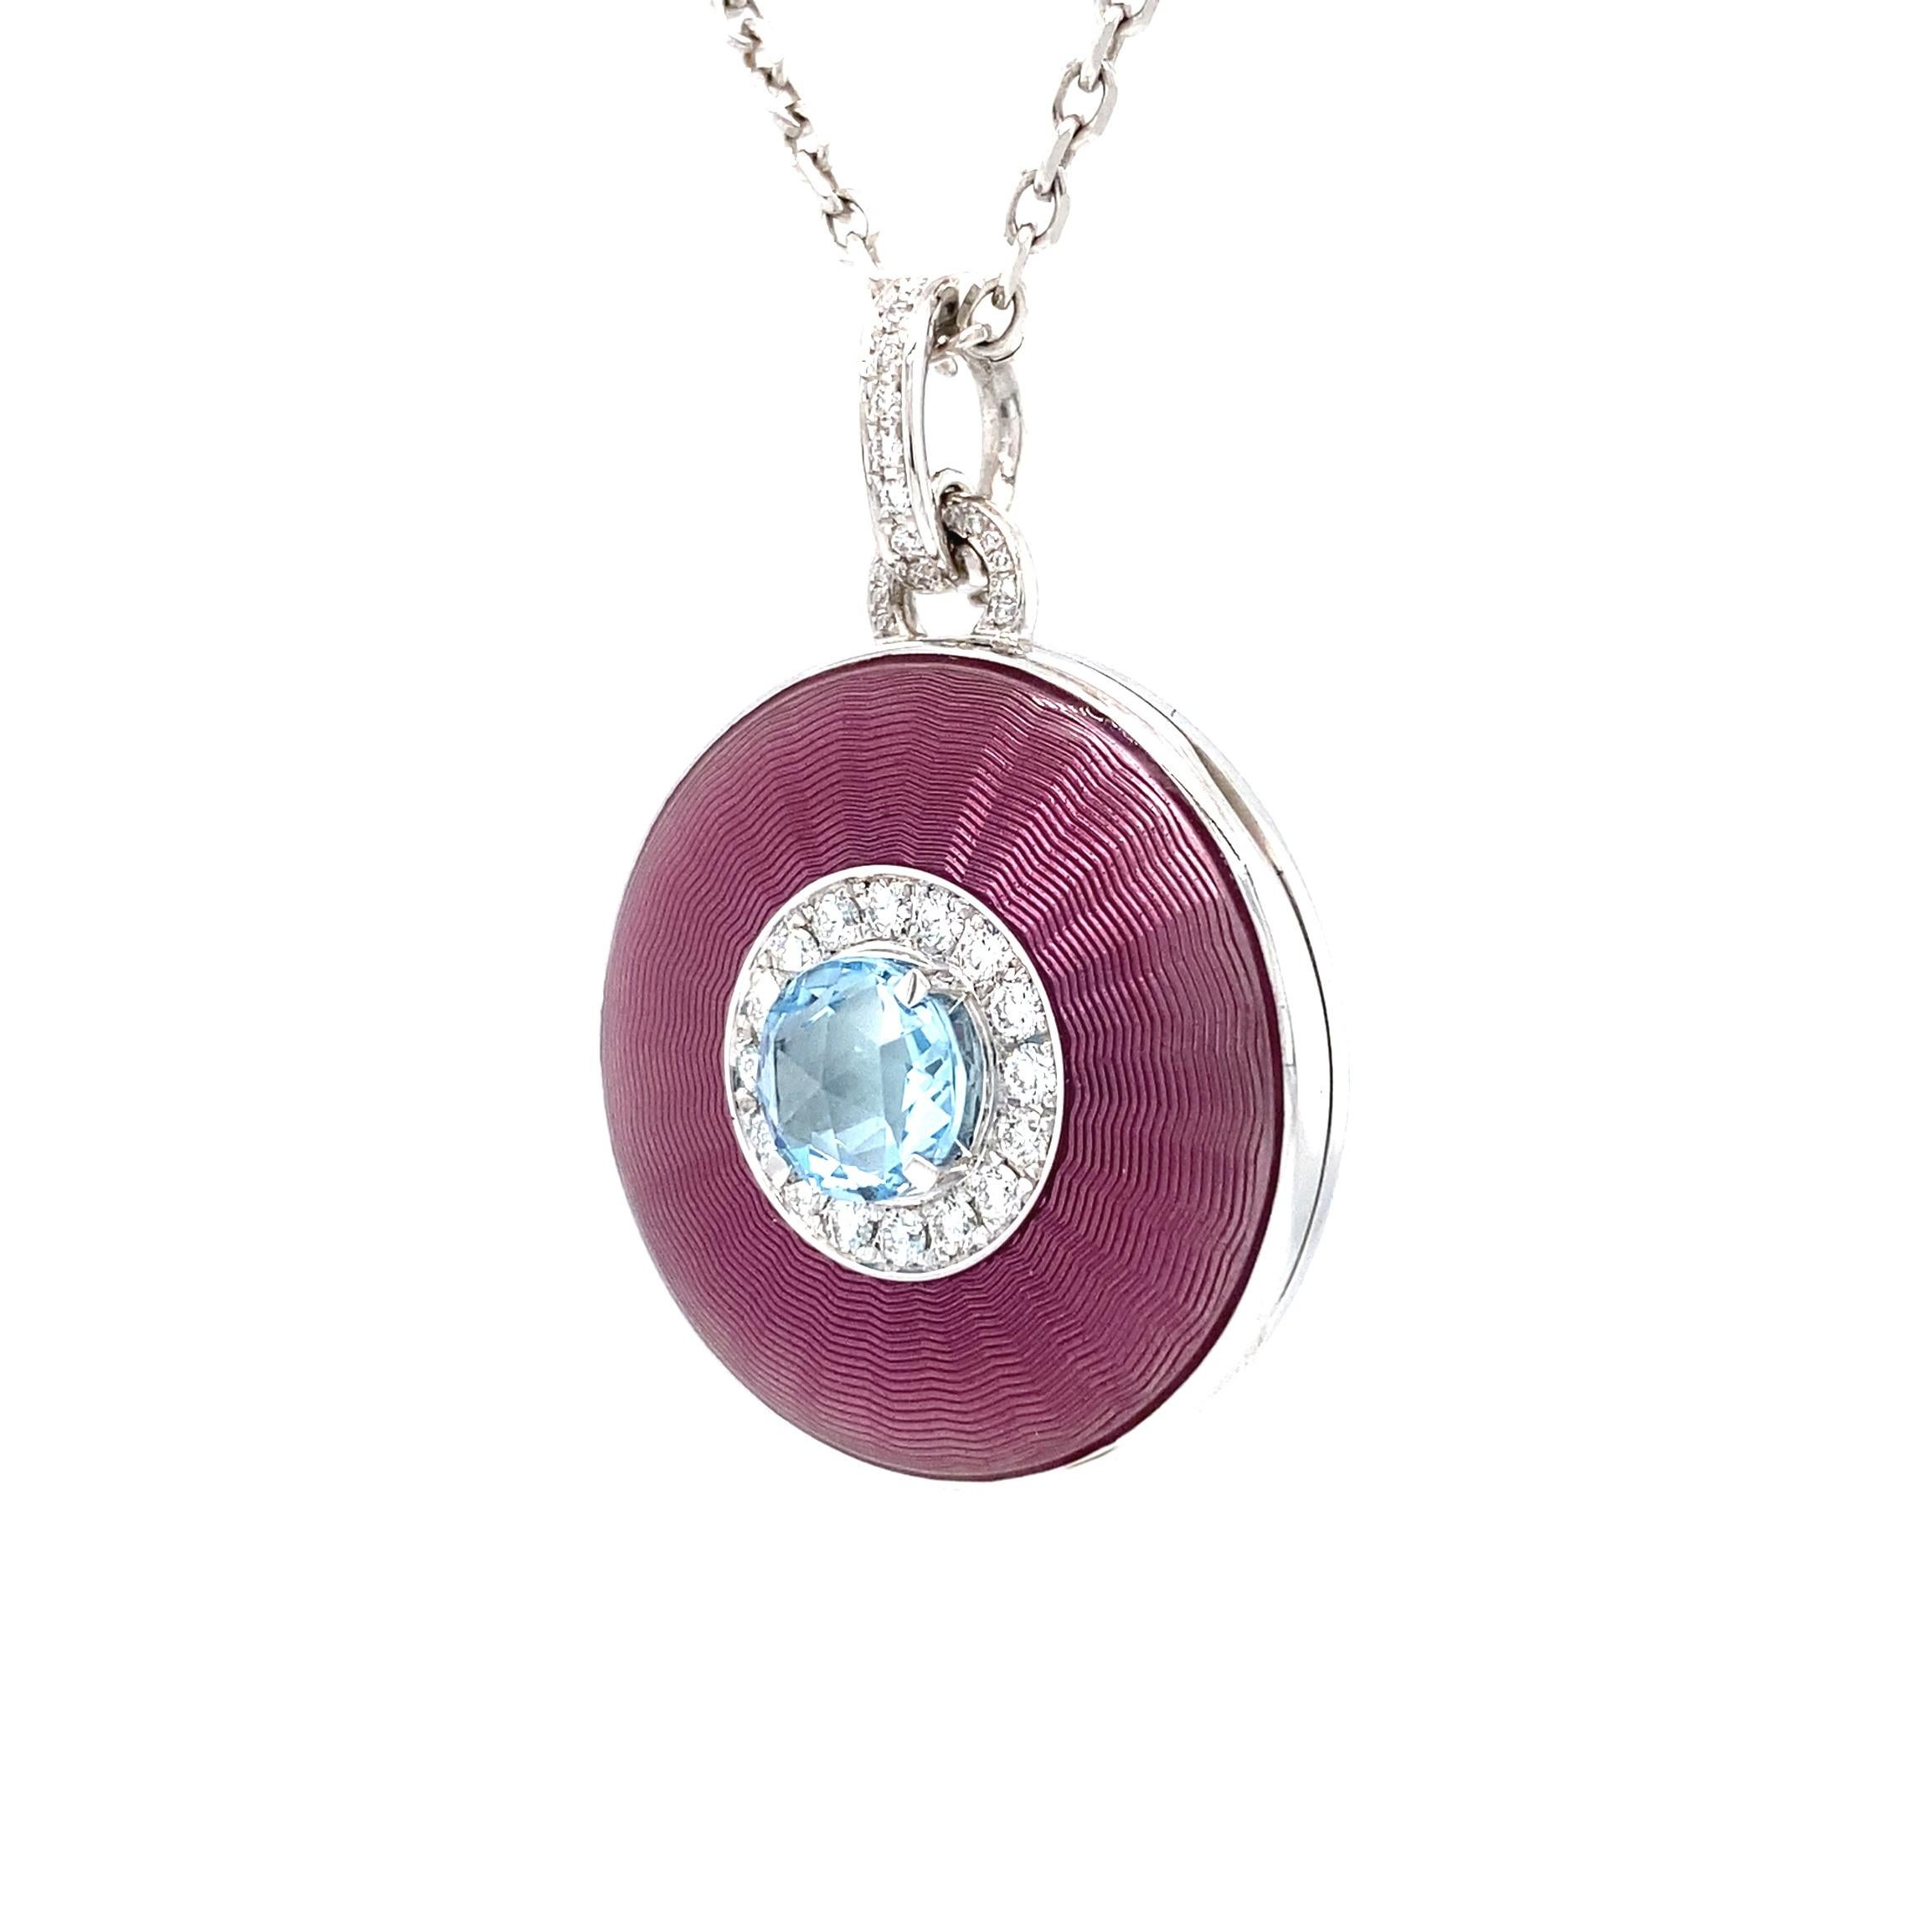 Victorian Round Locket Pendant Necklace 18k White Gold Pink Enamel 37 Diamonds Aquamarine For Sale